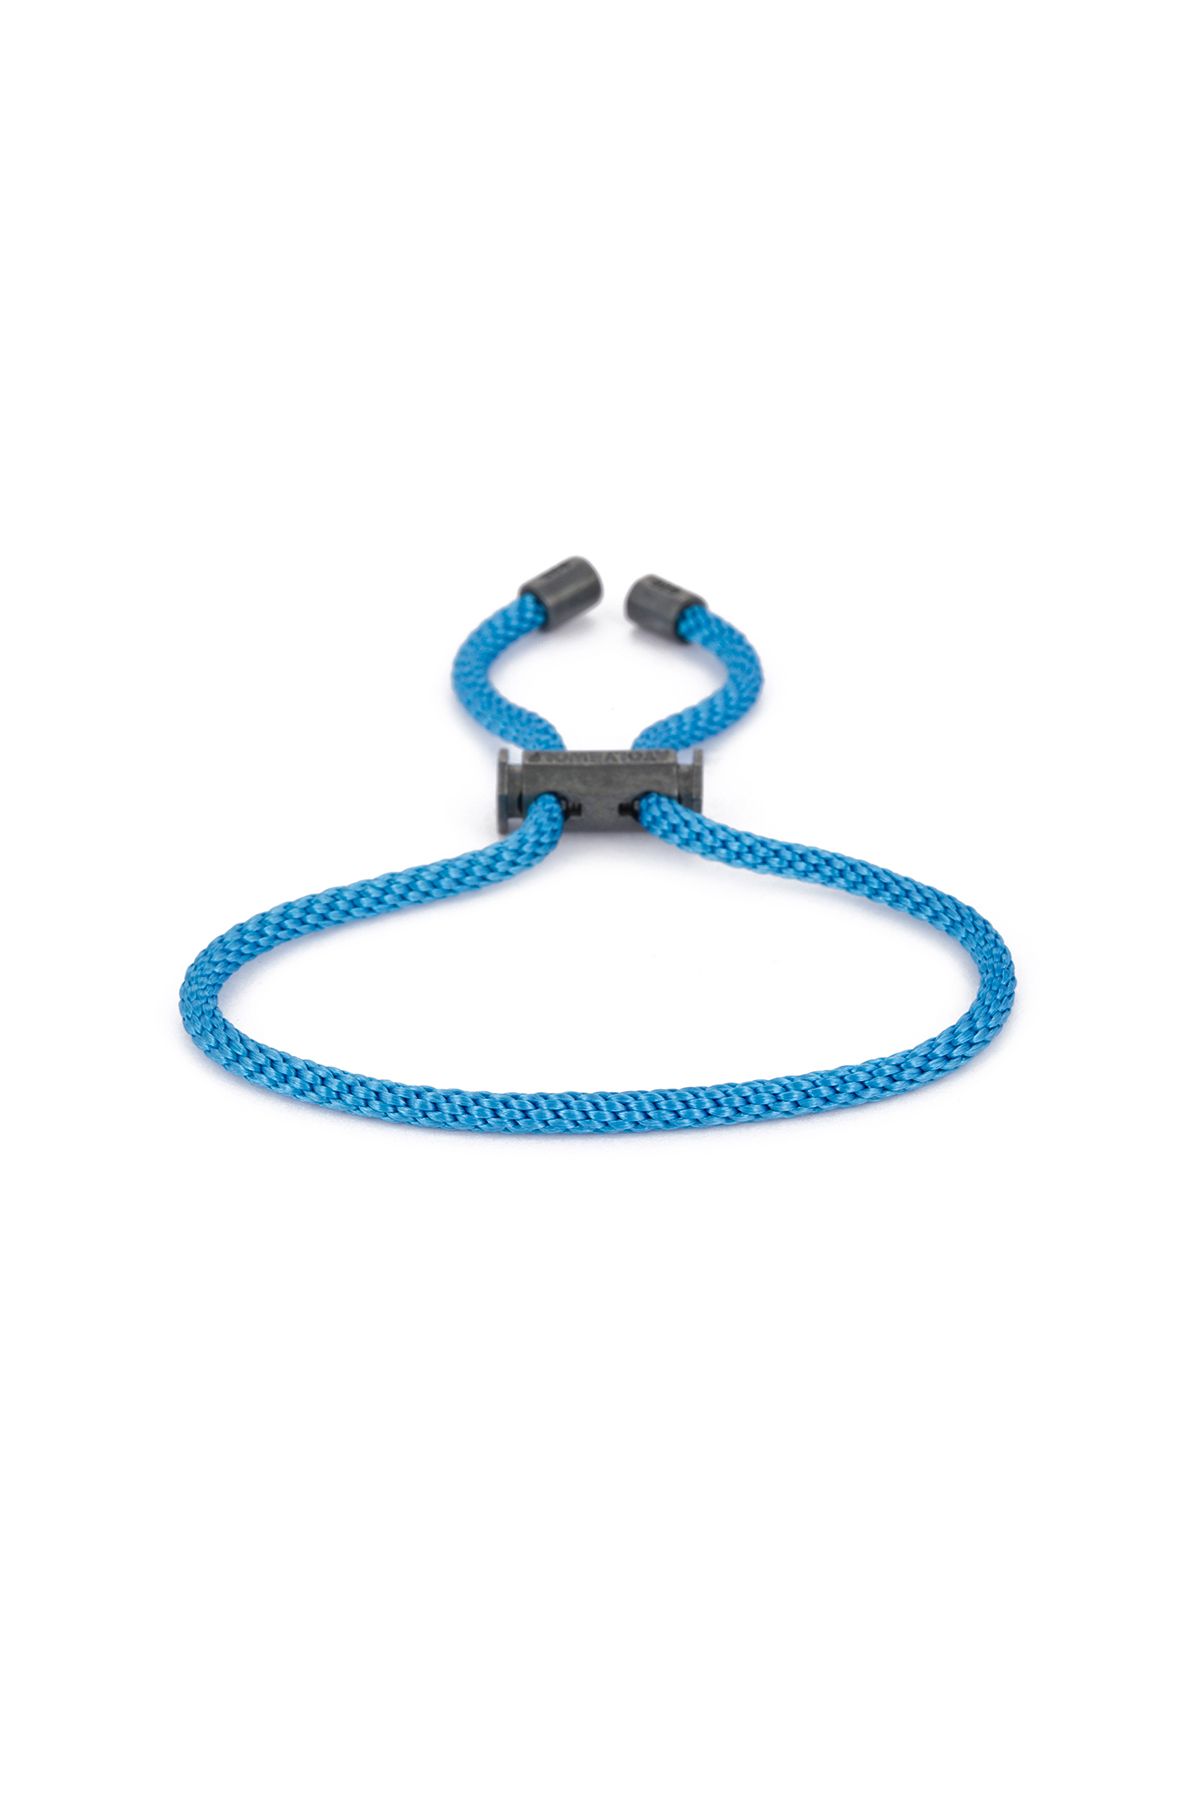 Atolyewolf Blue Lace Bracelet in Oxide